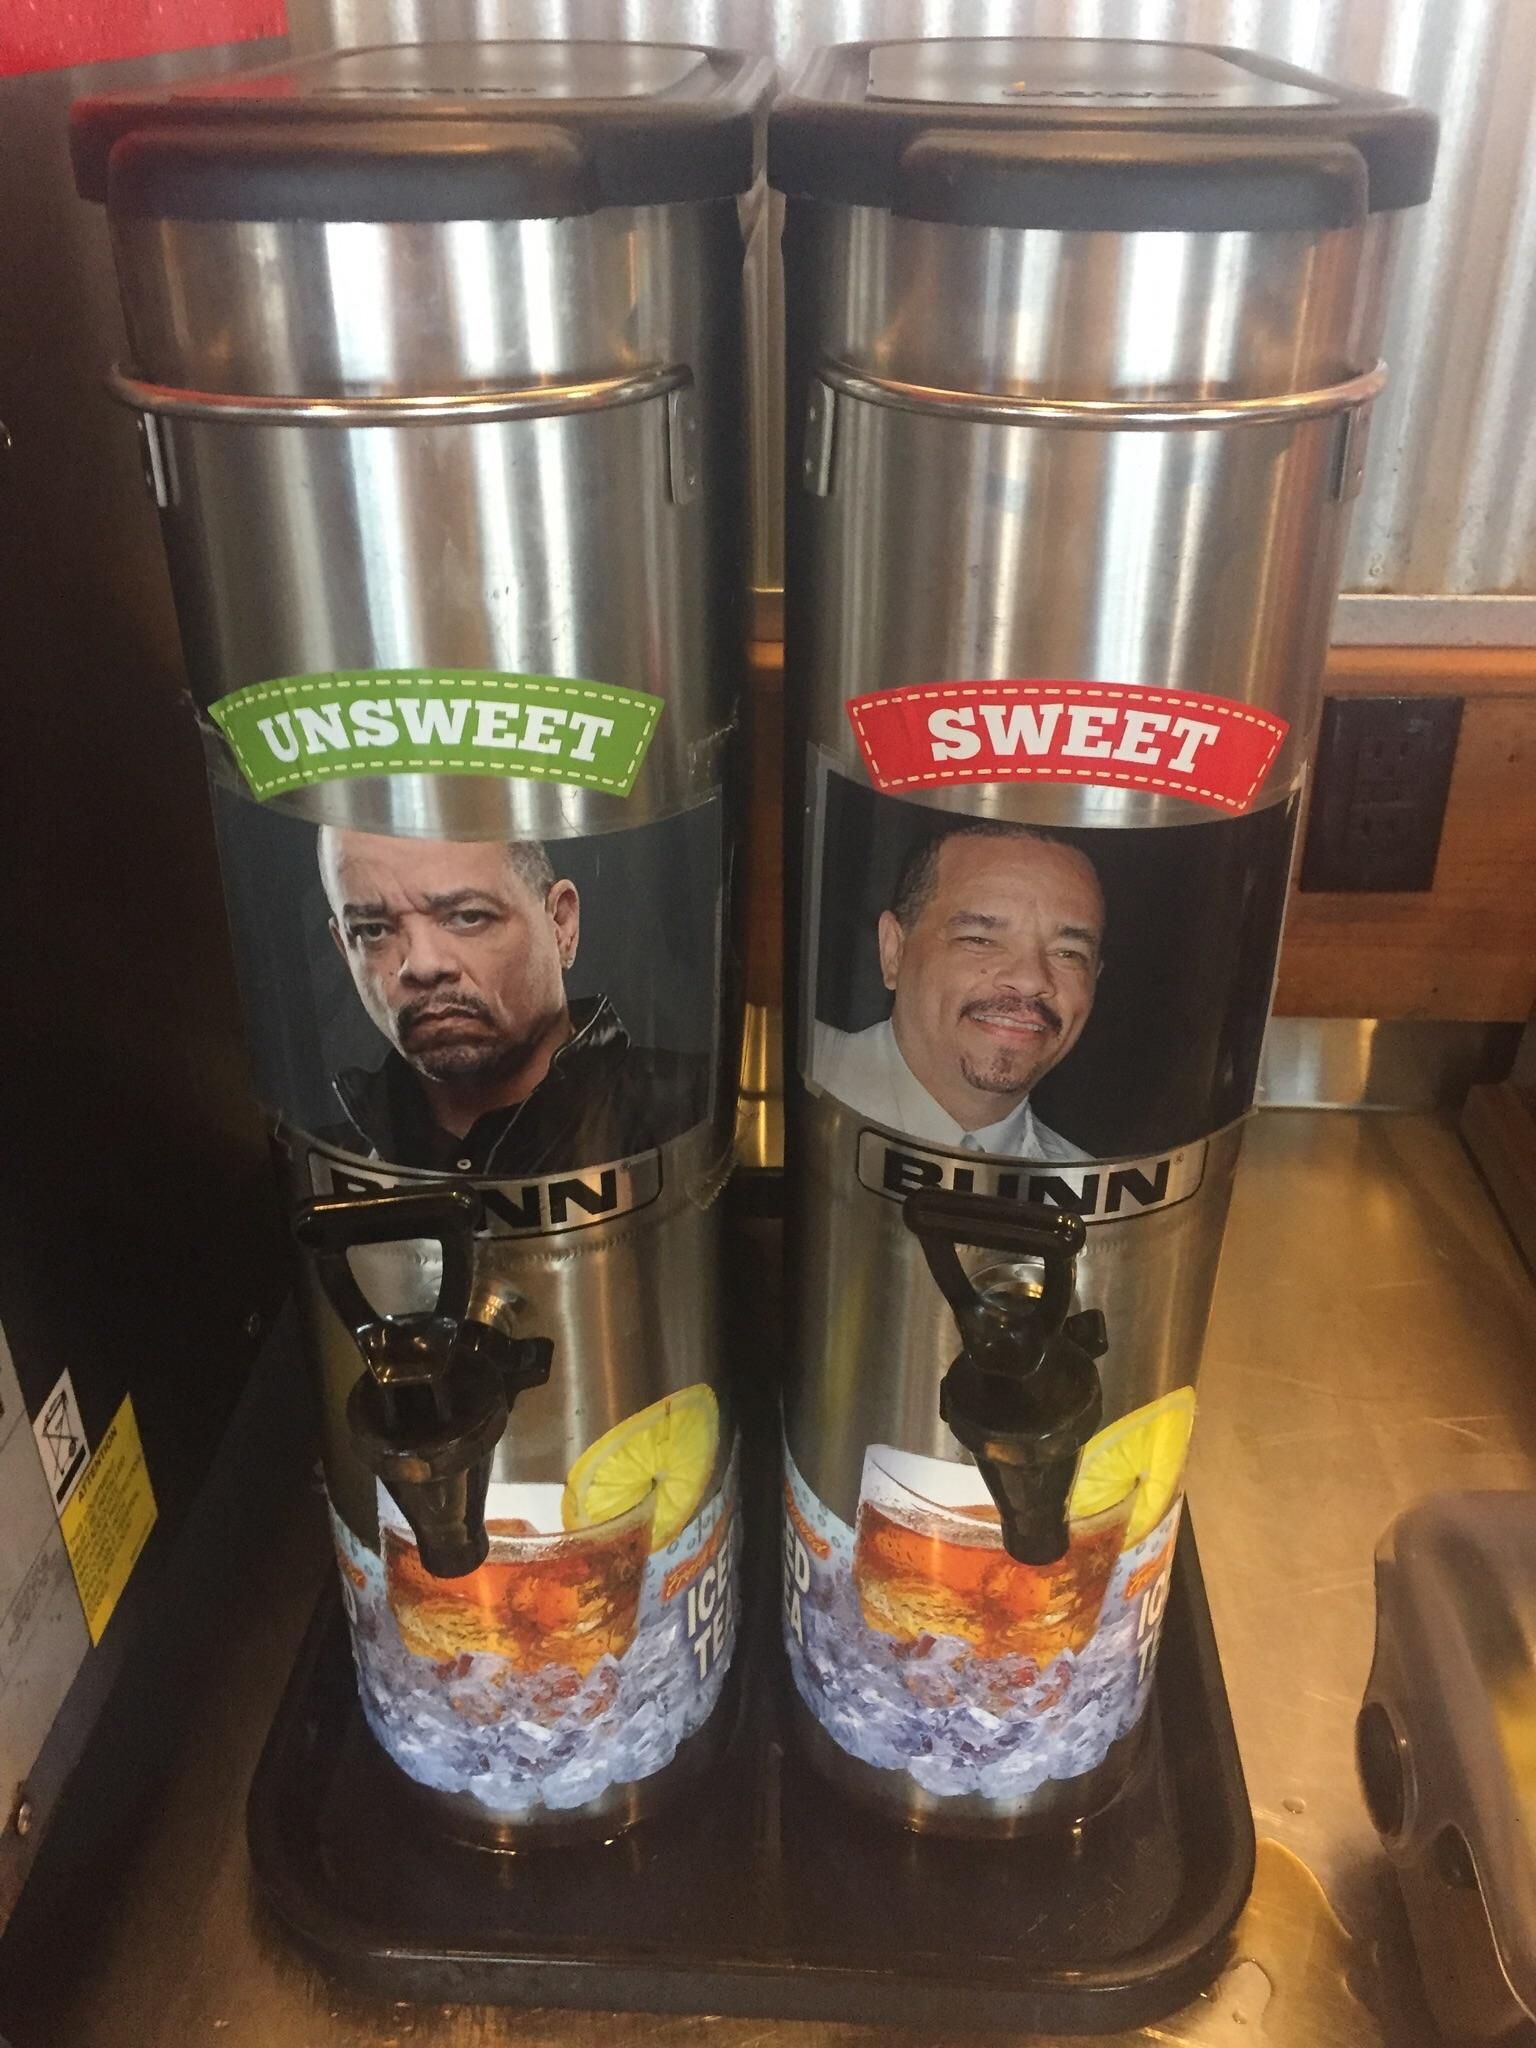 My local diner’s tea dispensers always make me smile.